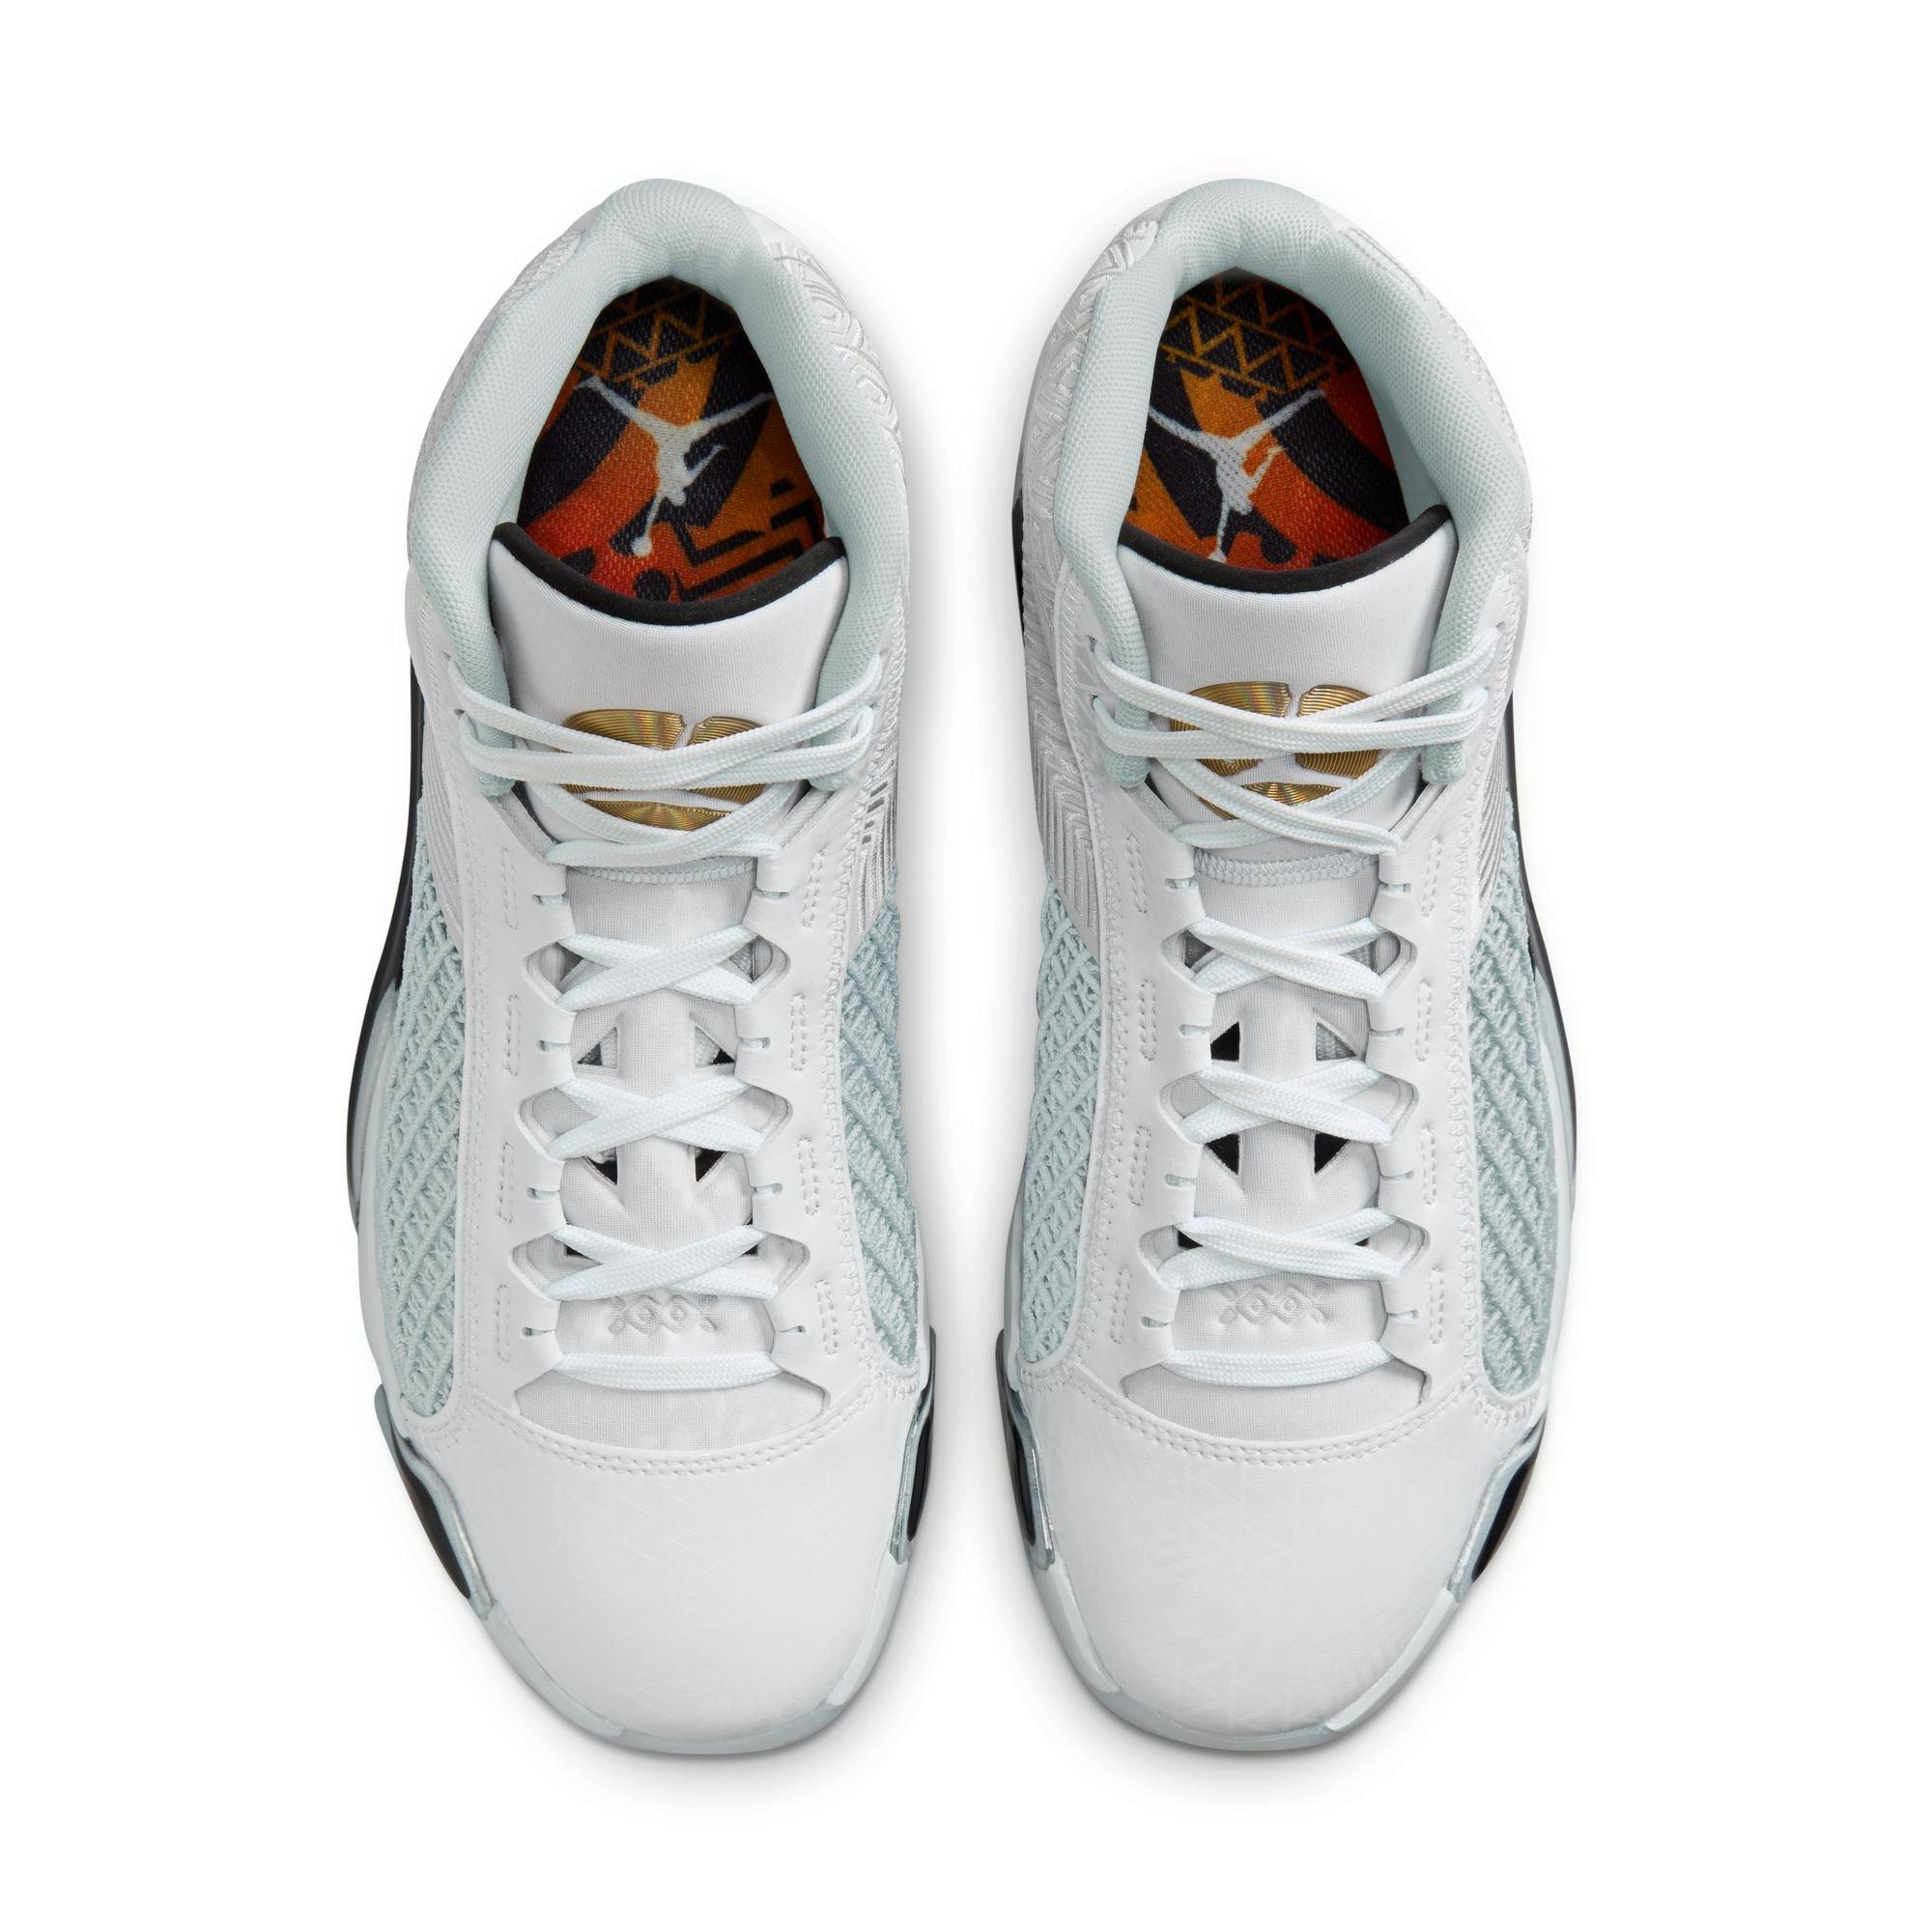 rhubarbes  Air jordans, Air jordan basketball shoes, Jordans